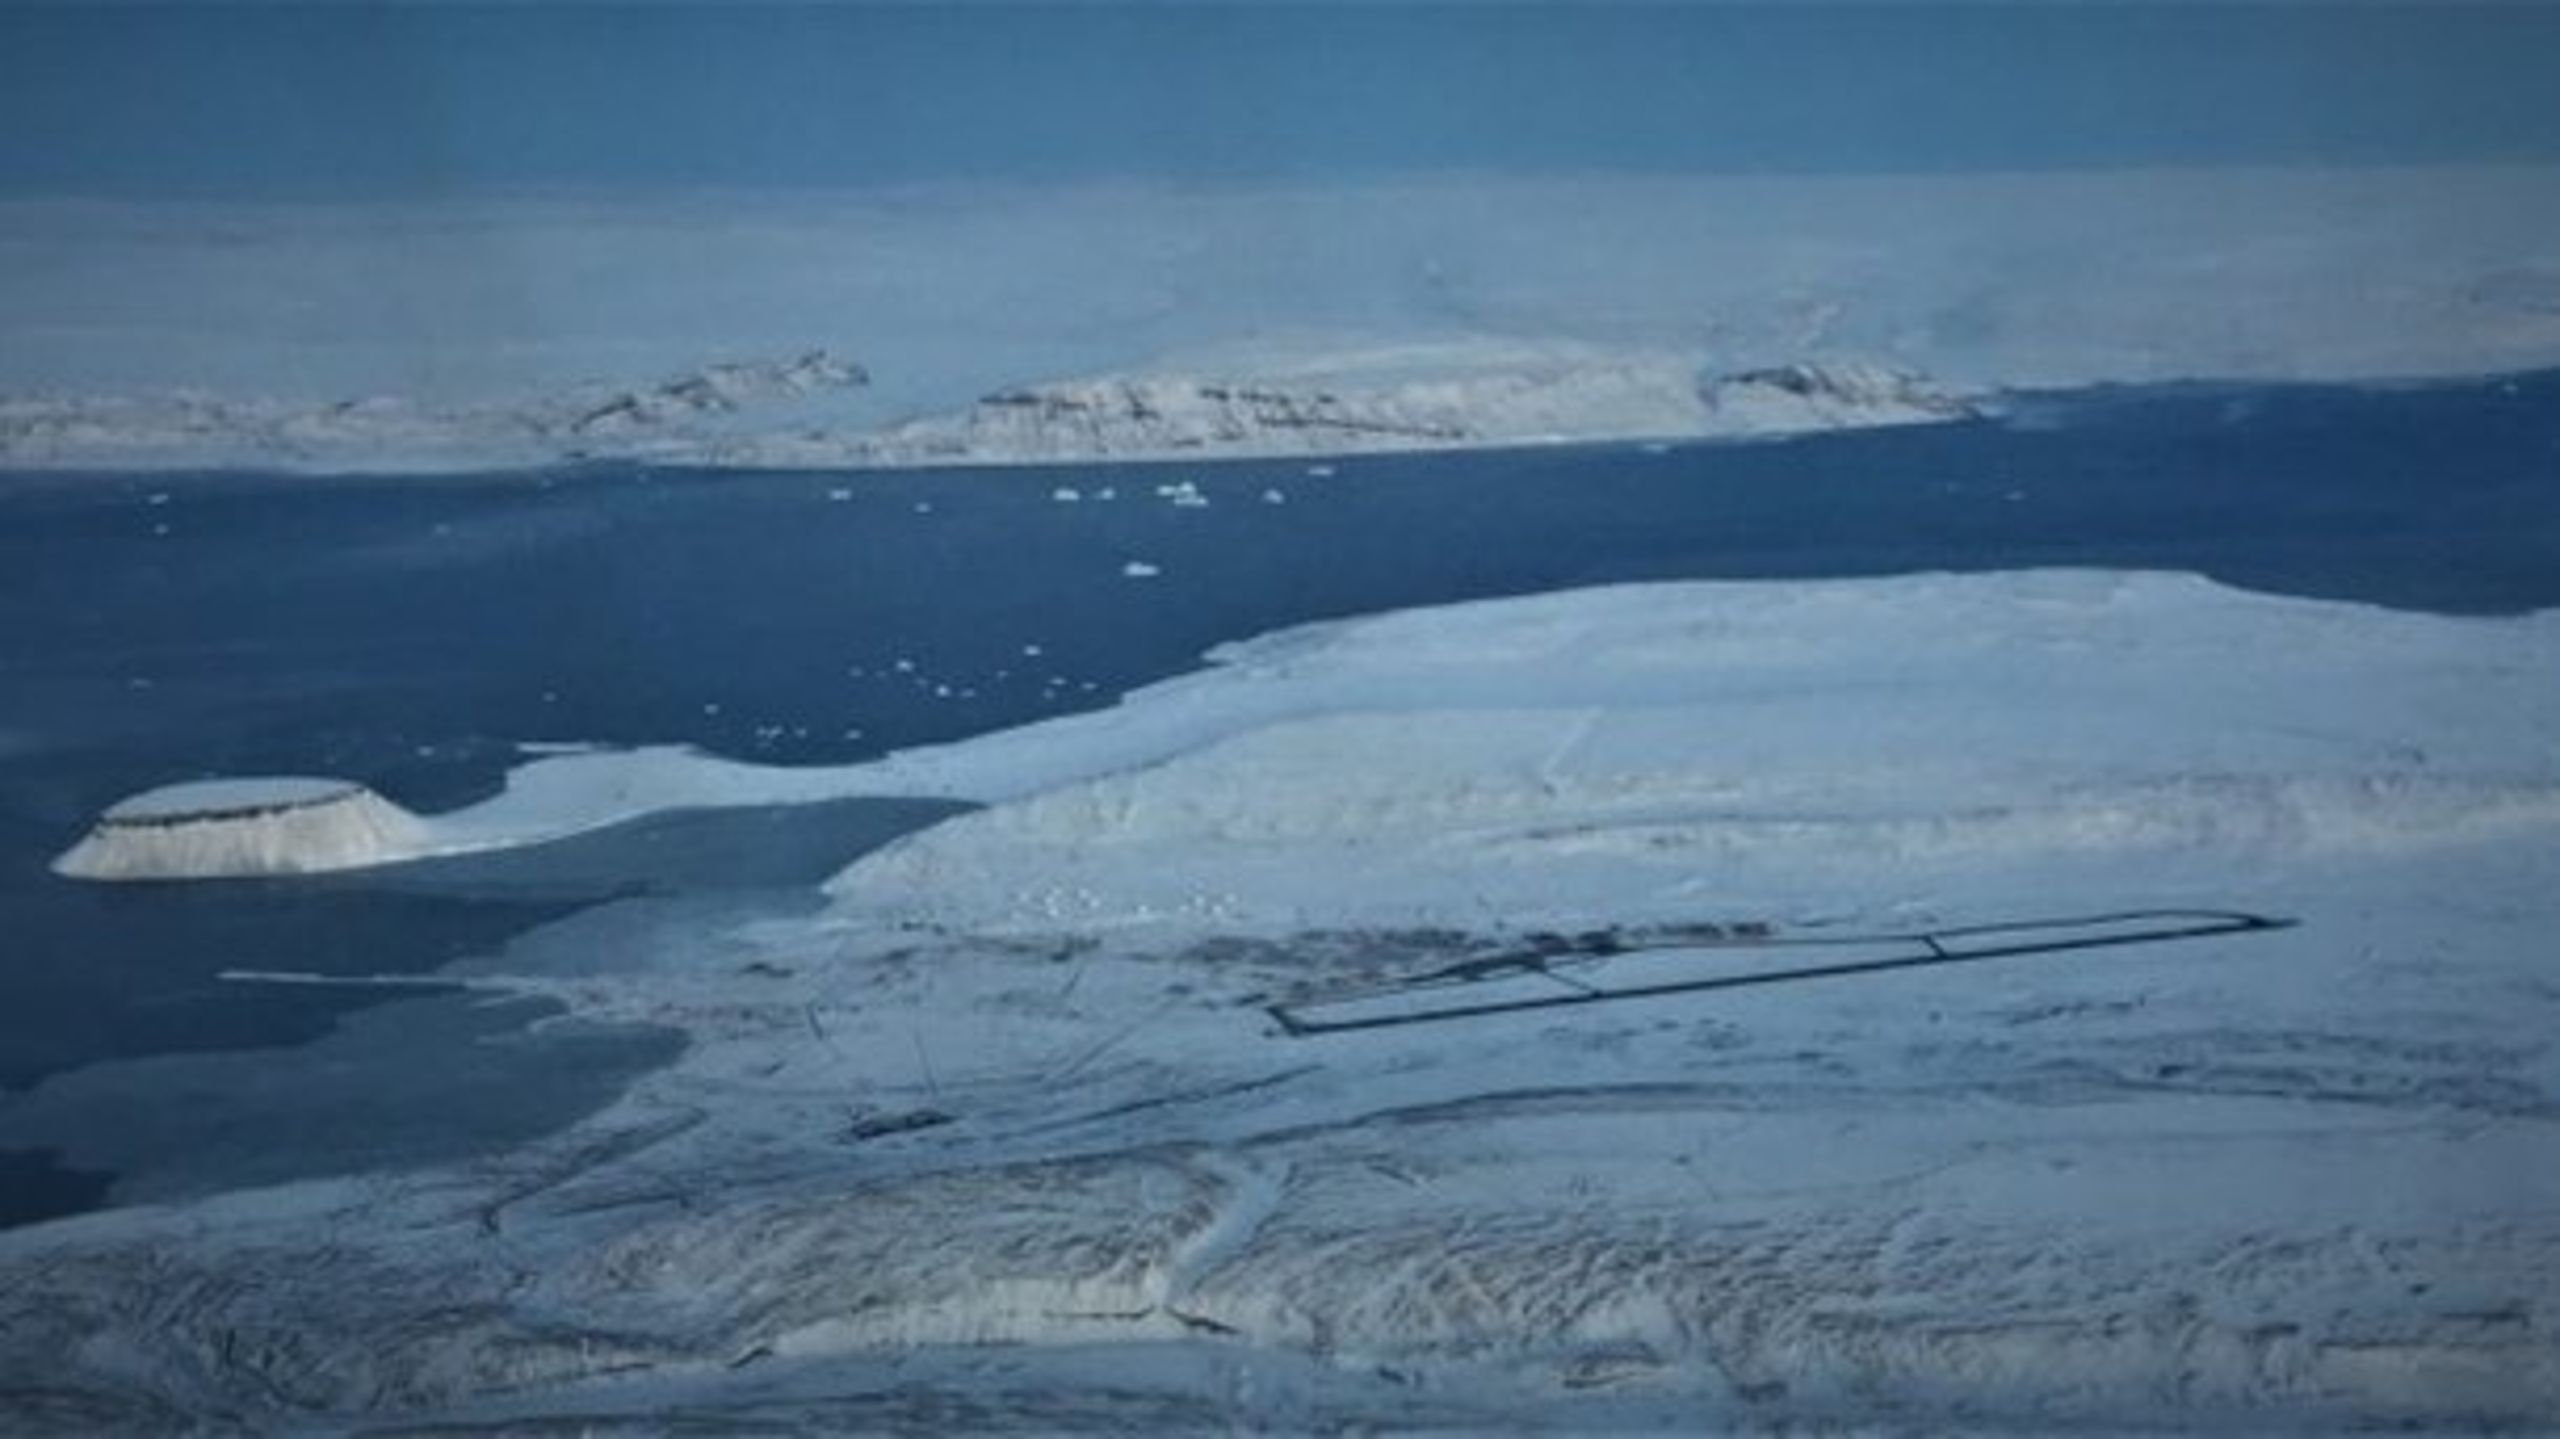 Thulebasen ligger i verdens udkant – knap 4.000 kilometer fra Danmark og lidt længere fra Washington – men har været og er alligevel centrum for spændinger mellem Grønland, Danmark og USA.